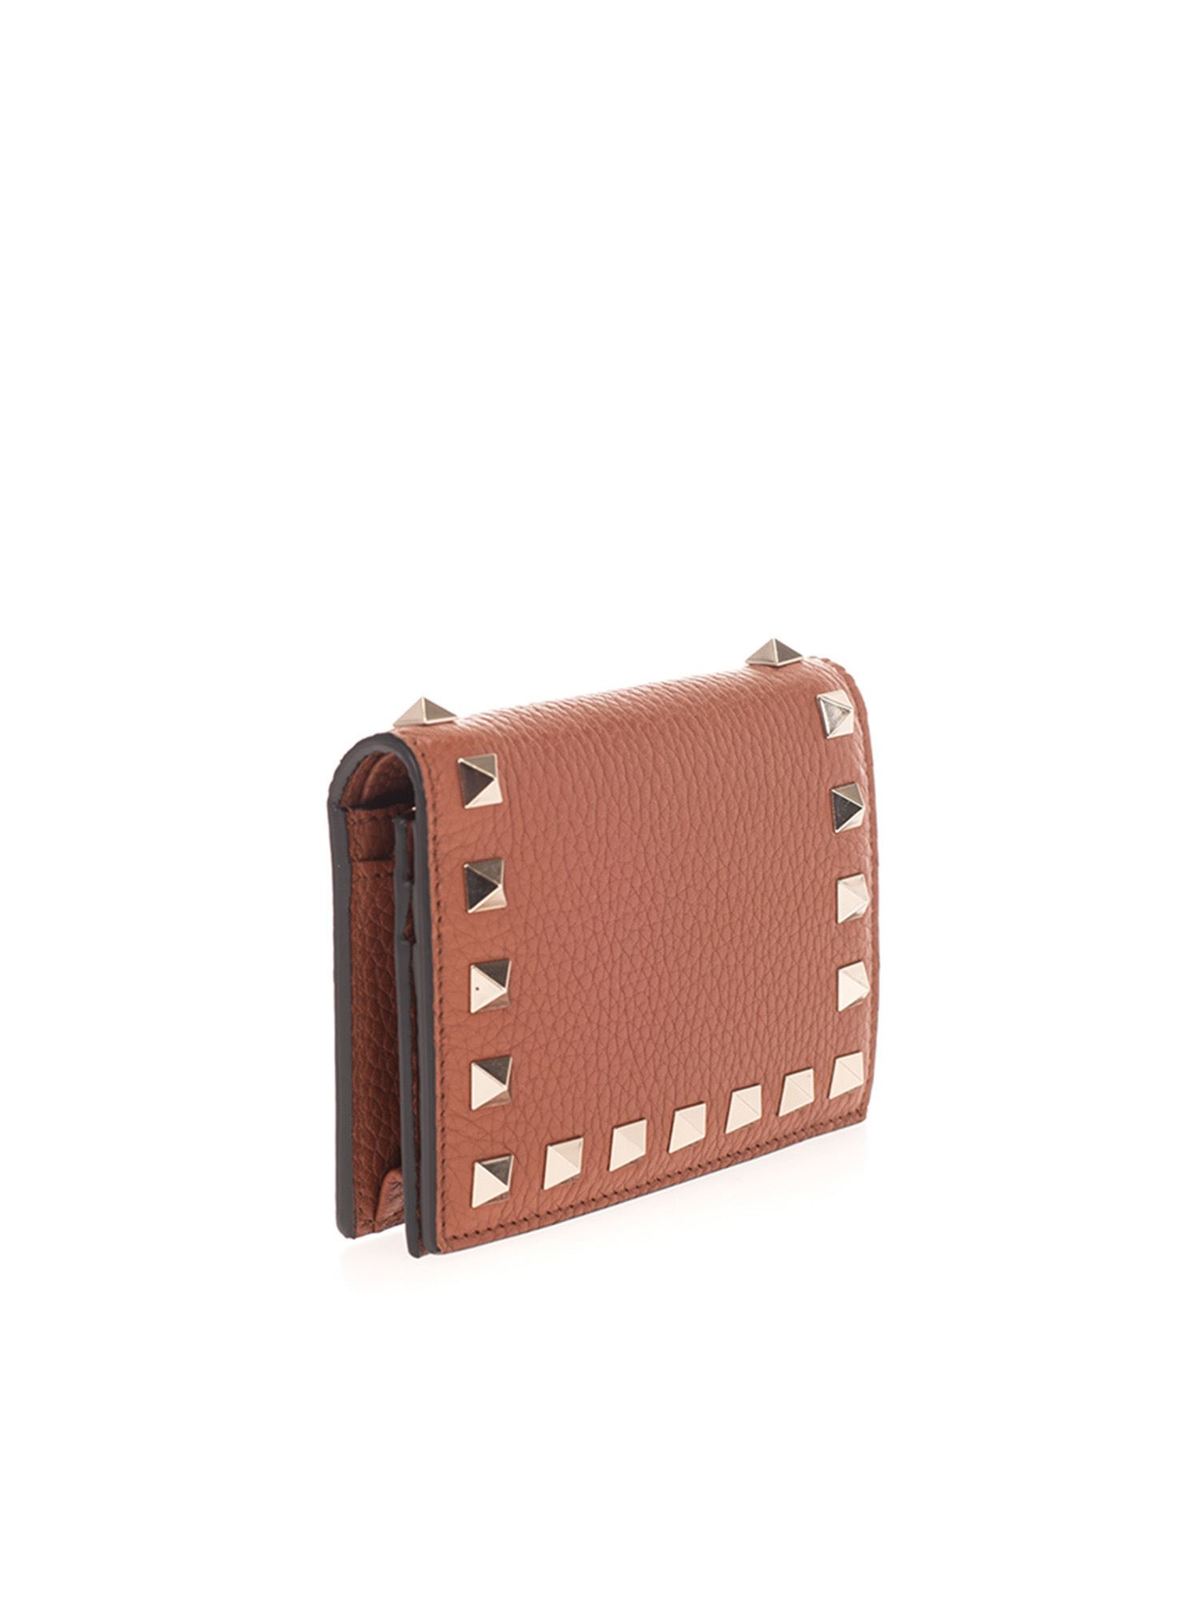 arve fornuft Turbulens Wallets & purses Valentino Garavani - Small Rockstud wallet in Selleria  color - VW2P0P39VSHHG5